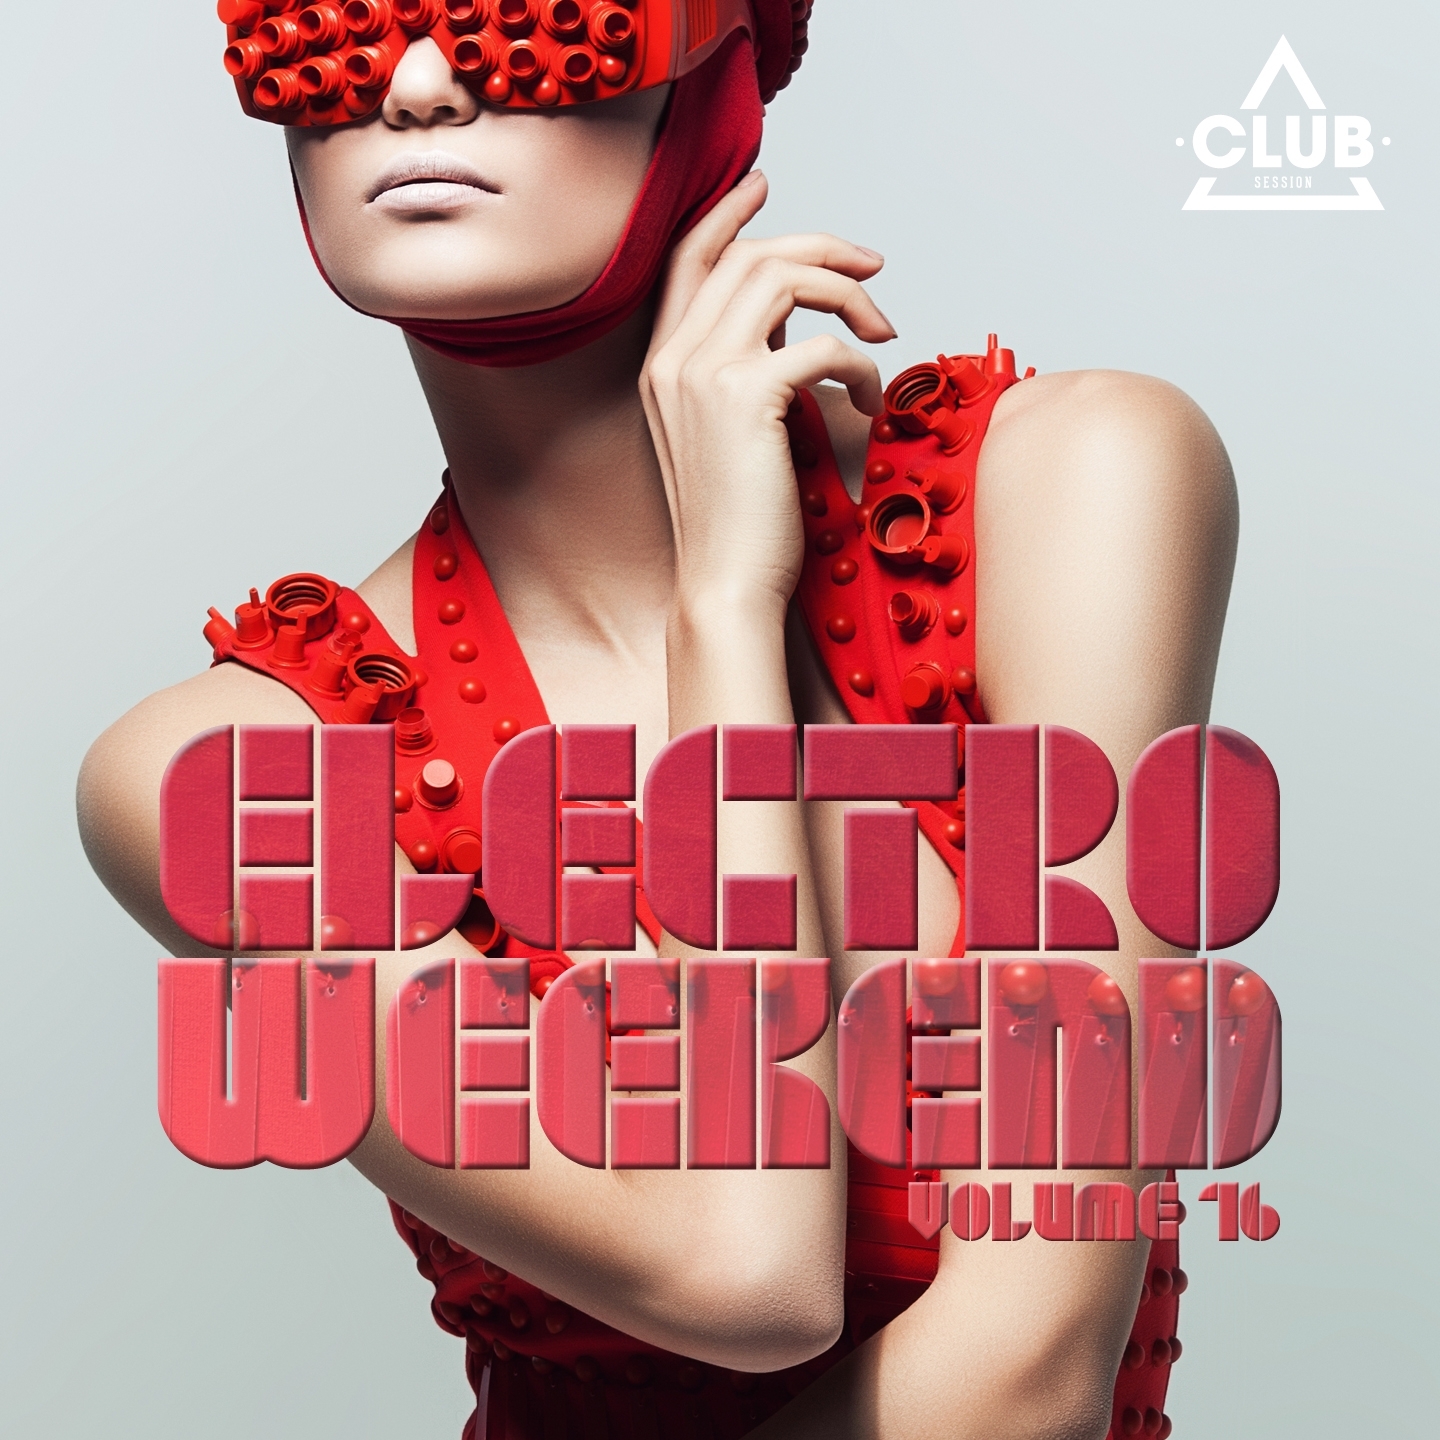 Electro Weekend, Vol. 16